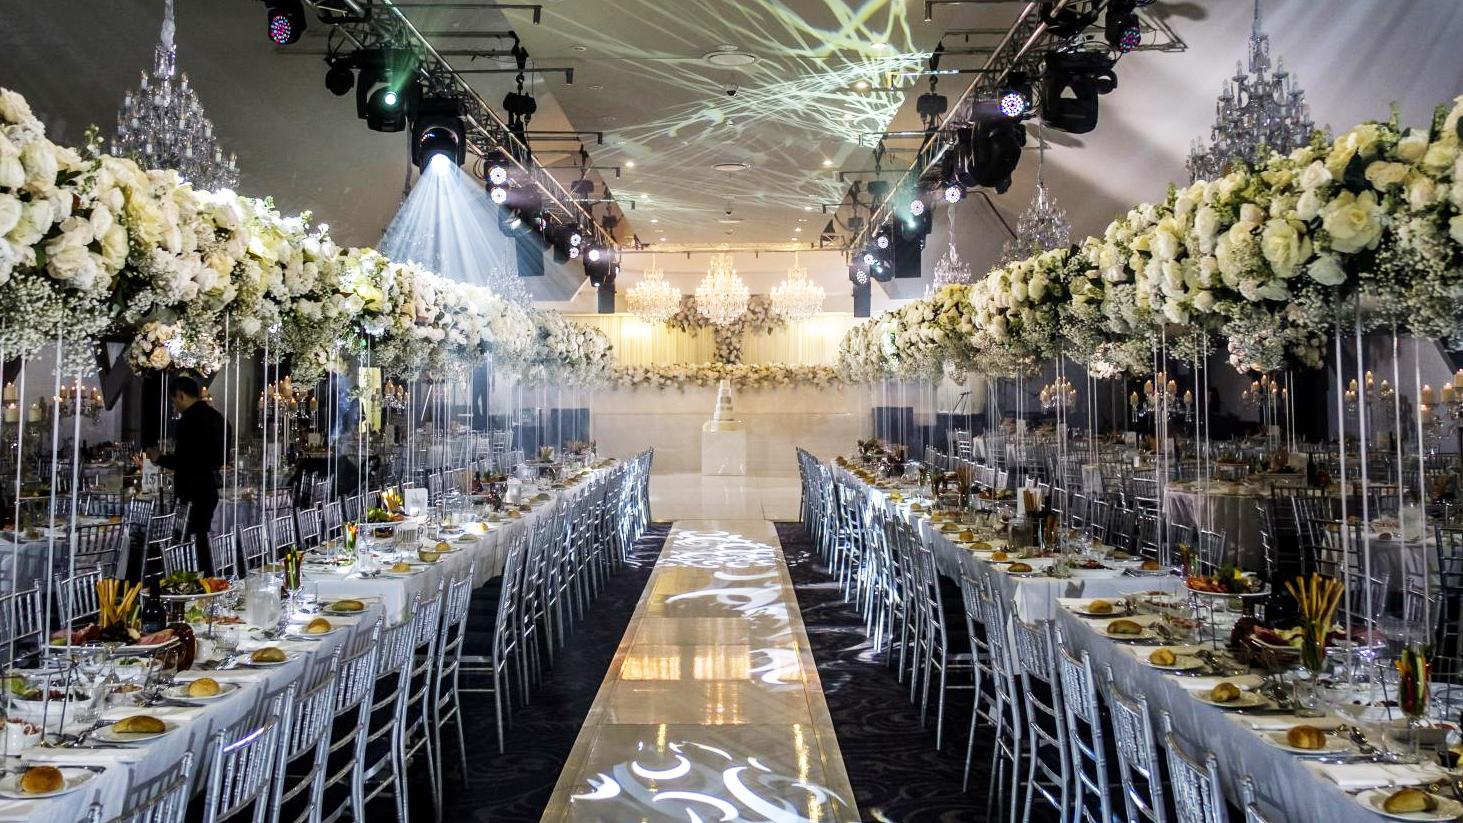 Find your Wedding Venue in Sydney